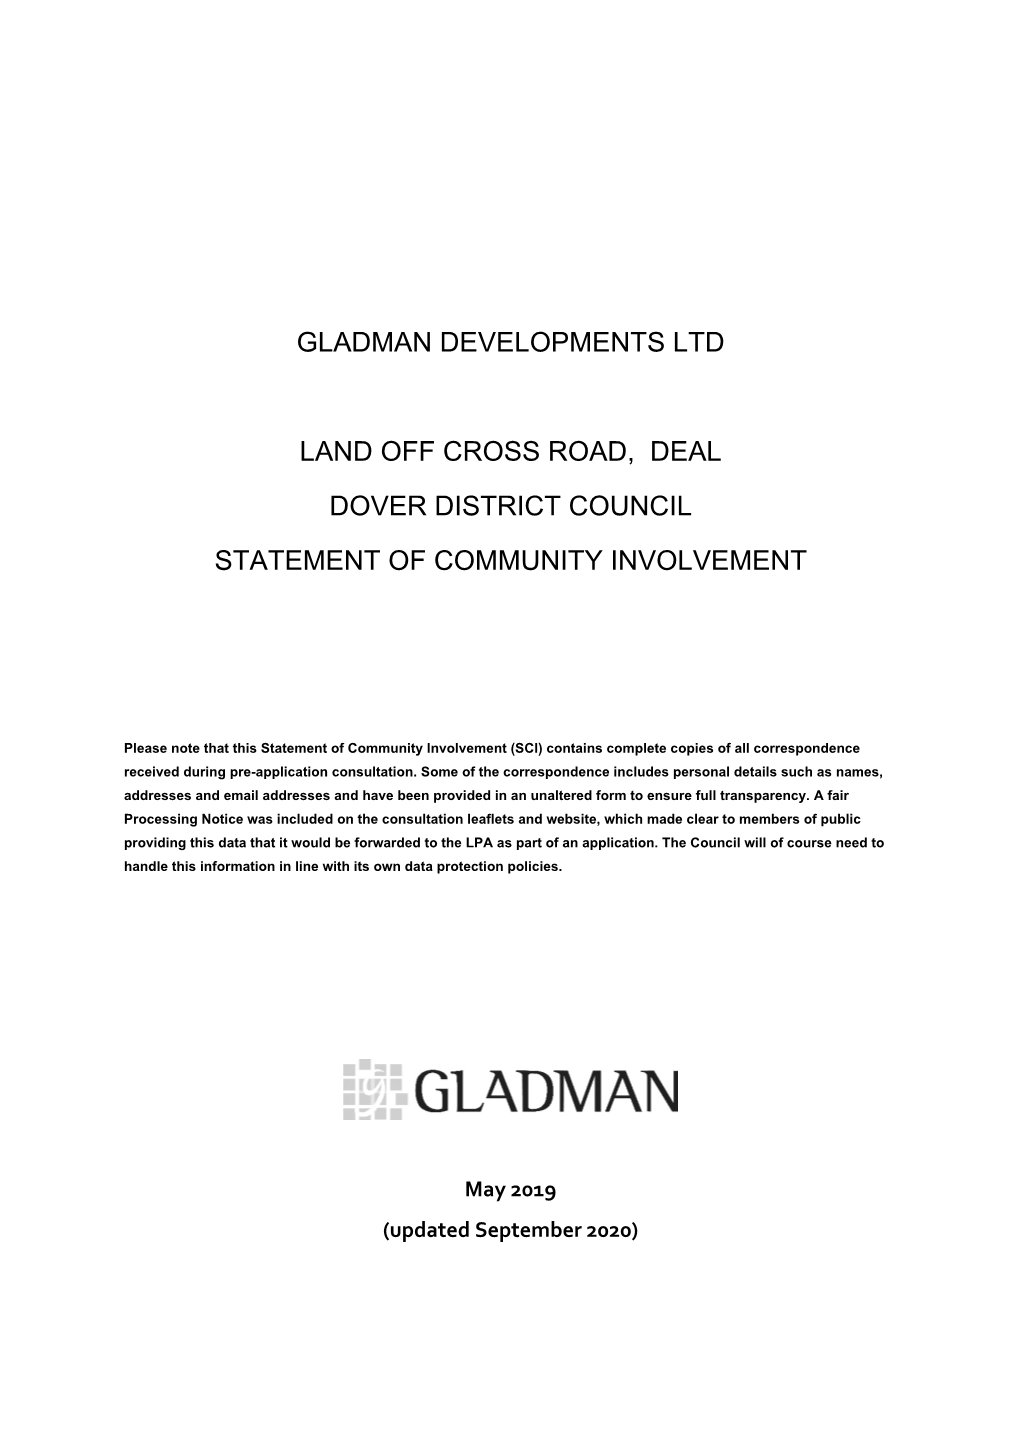 Gladman Developments Ltd Land Off Cross Road, Deal